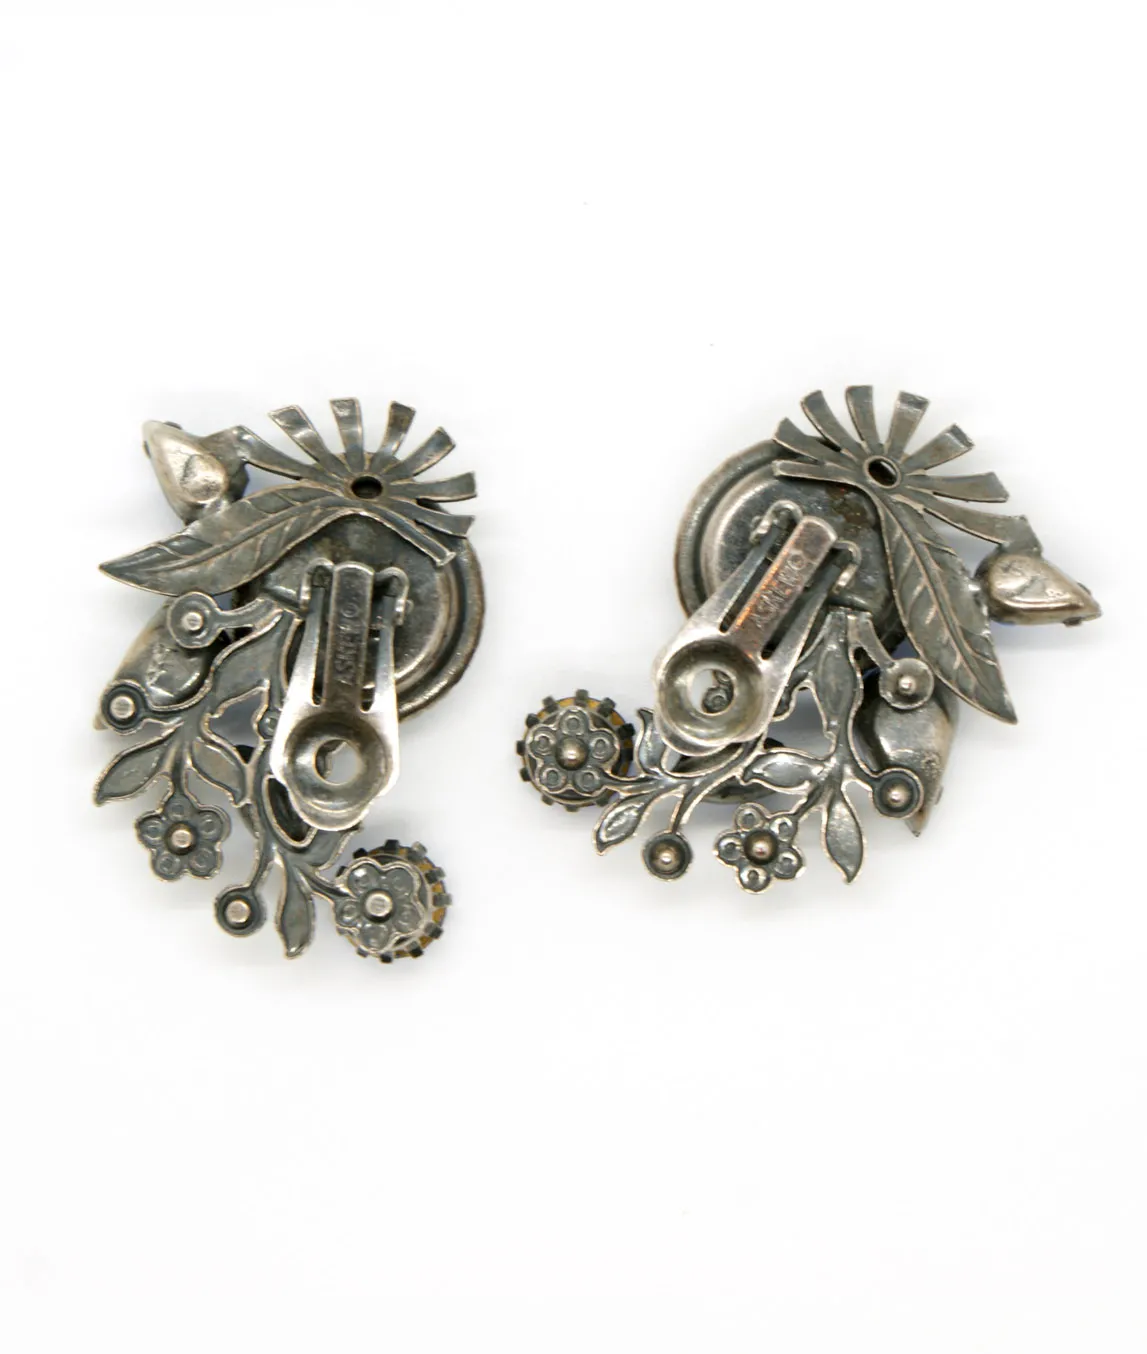 Silver plated pressed metal clip earrings by Askew London